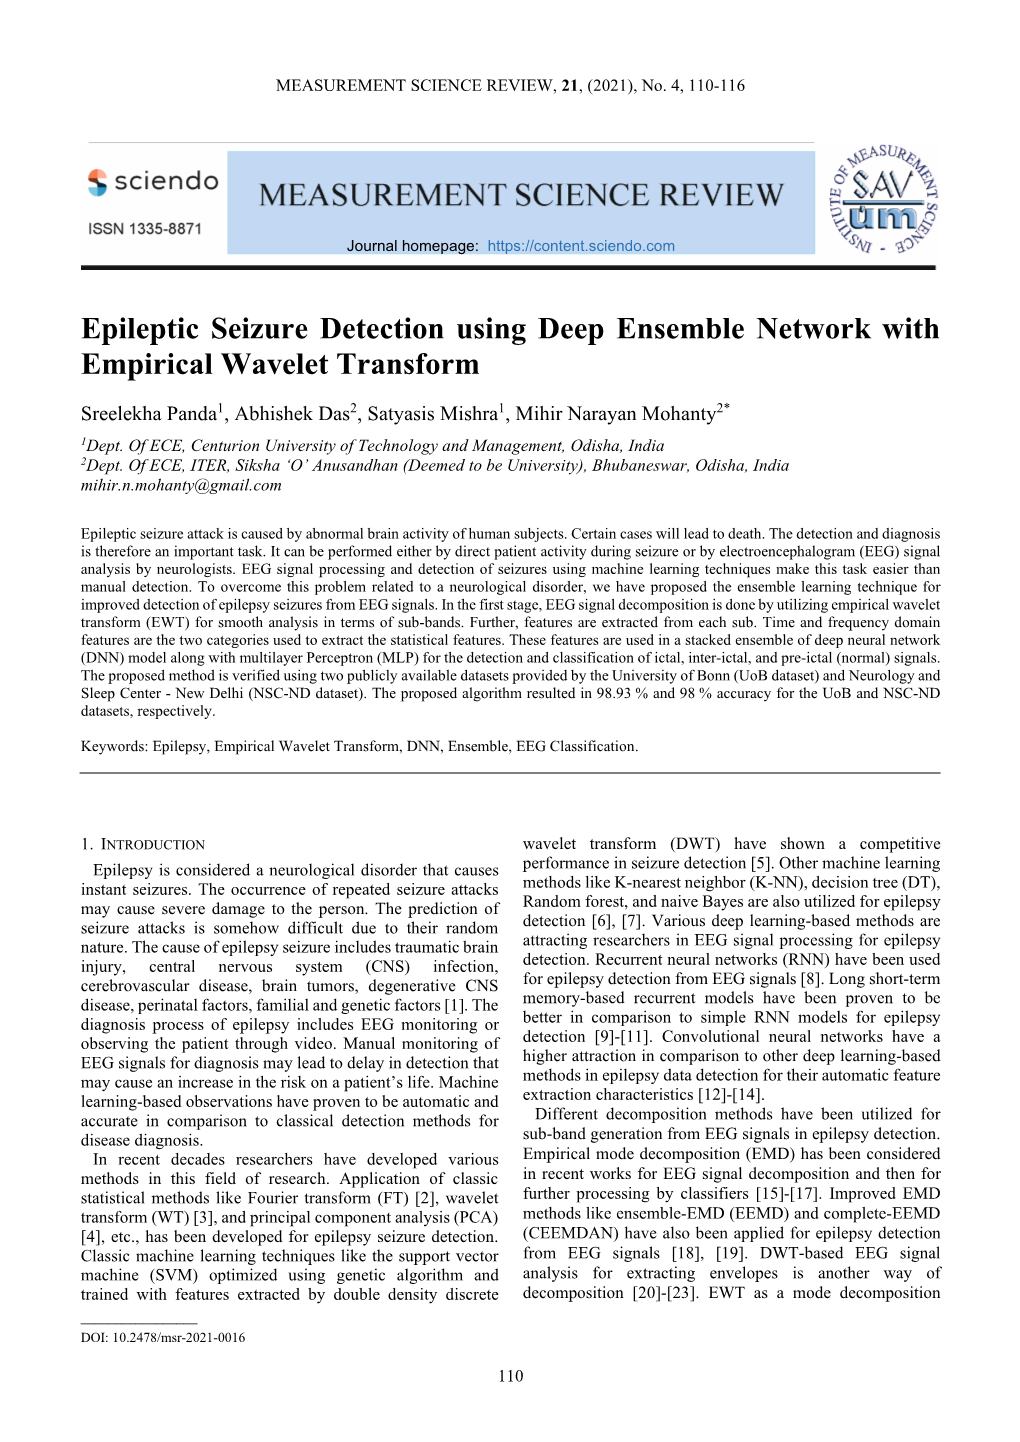 Epileptic Seizure Detection Using Deep Ensemble Network with Empirical Wavelet Transform